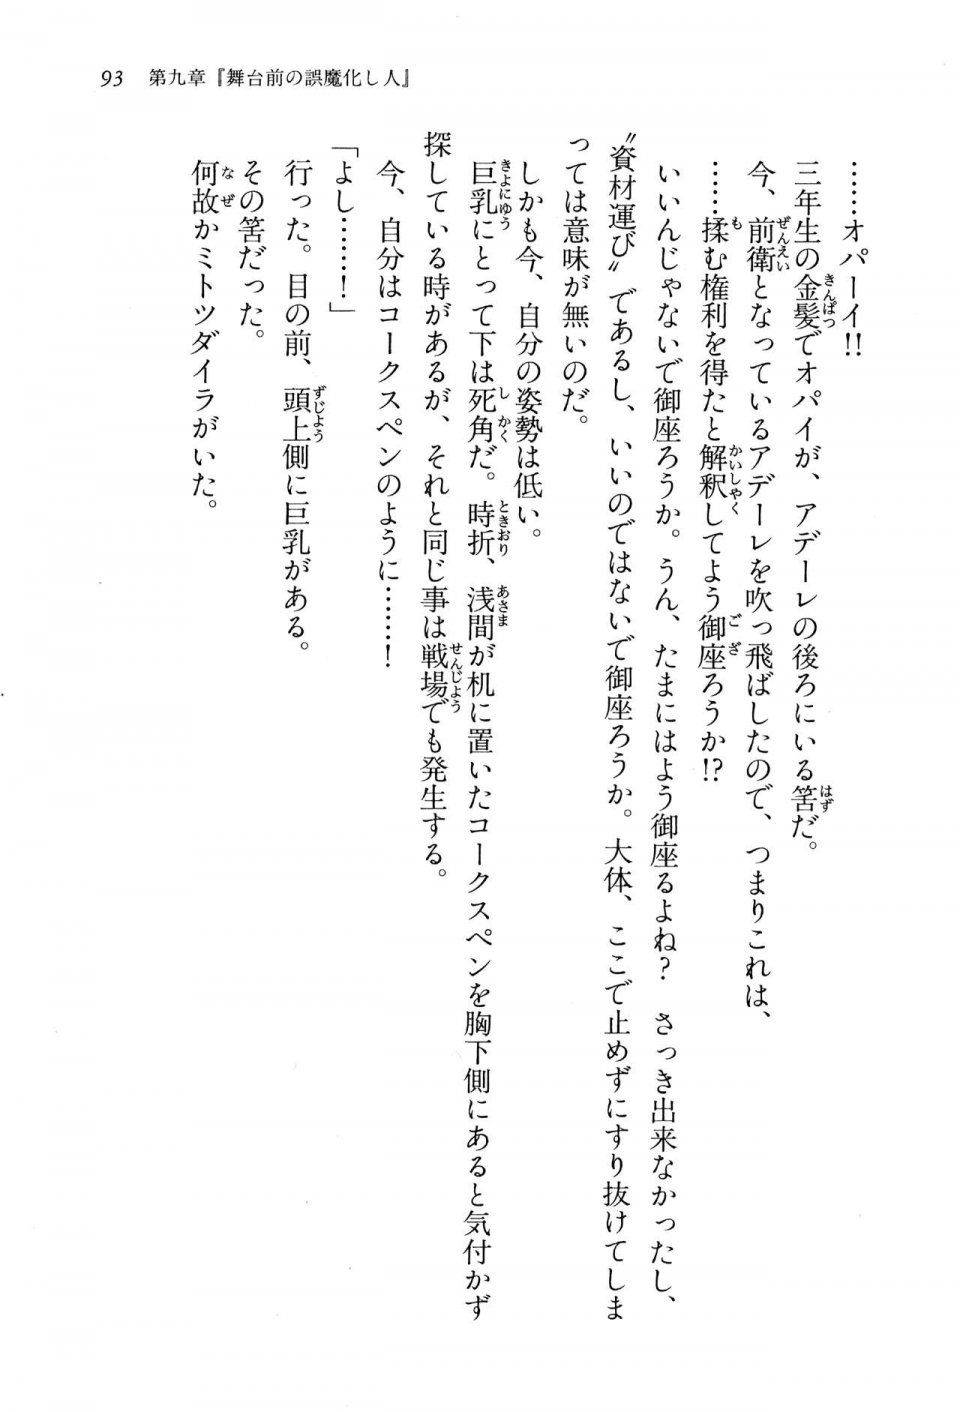 Kyoukai Senjou no Horizon BD Special Mininovel Vol 8(4B) - Photo #97